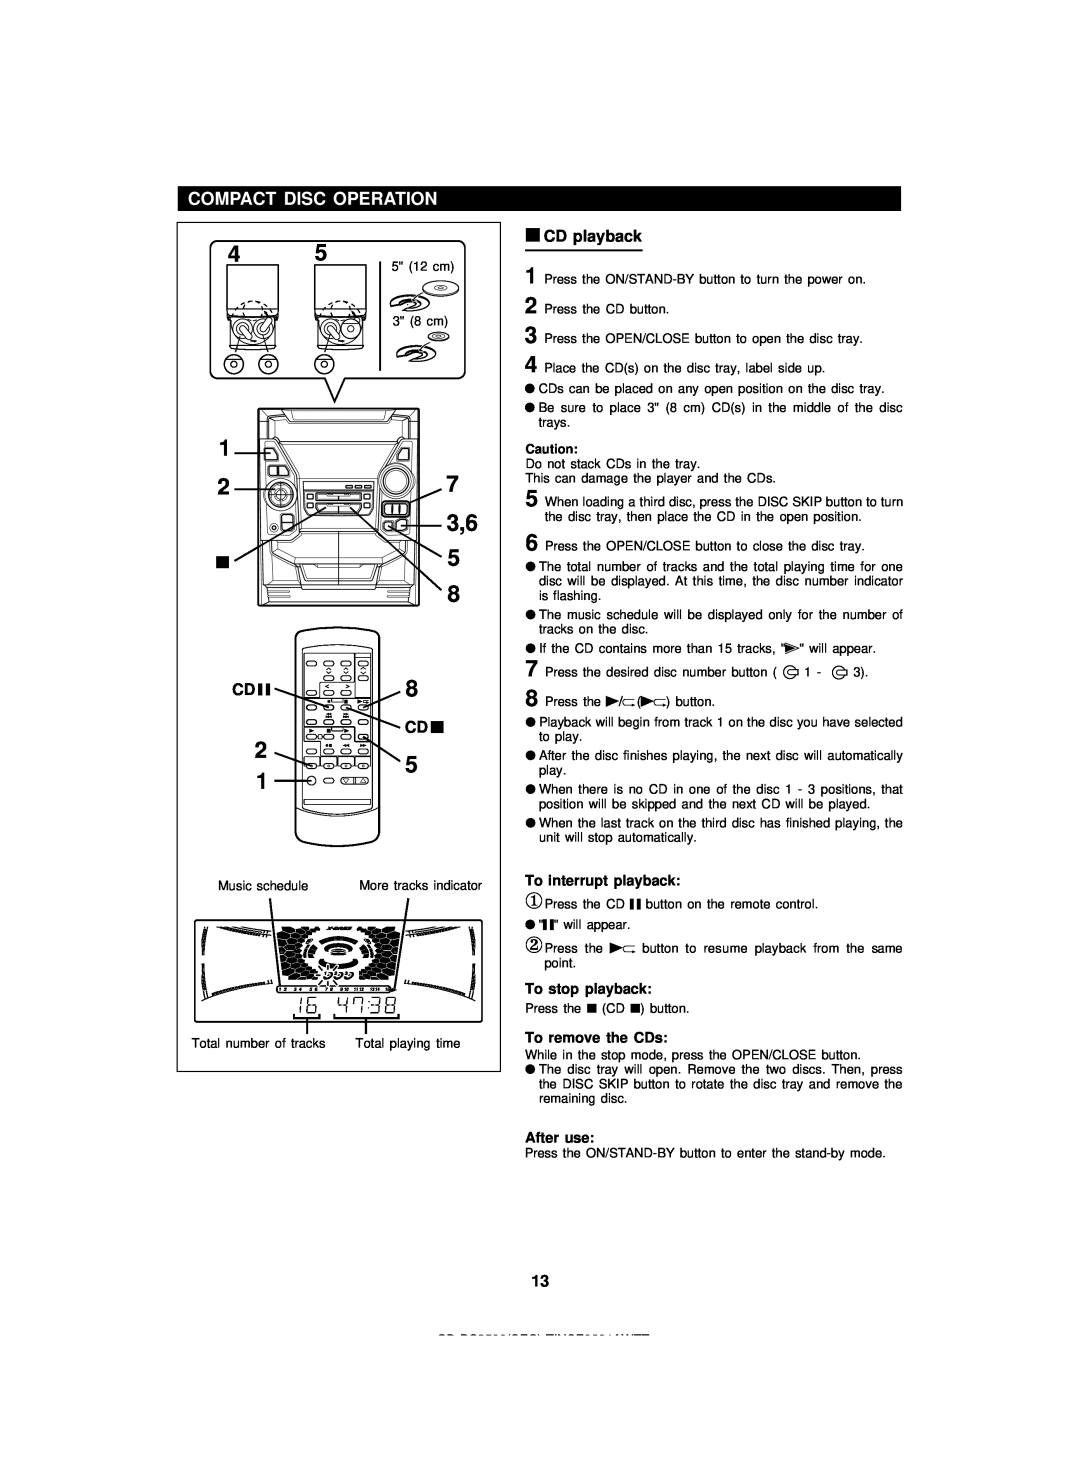 Sharp CD-PC3500 operation manual 